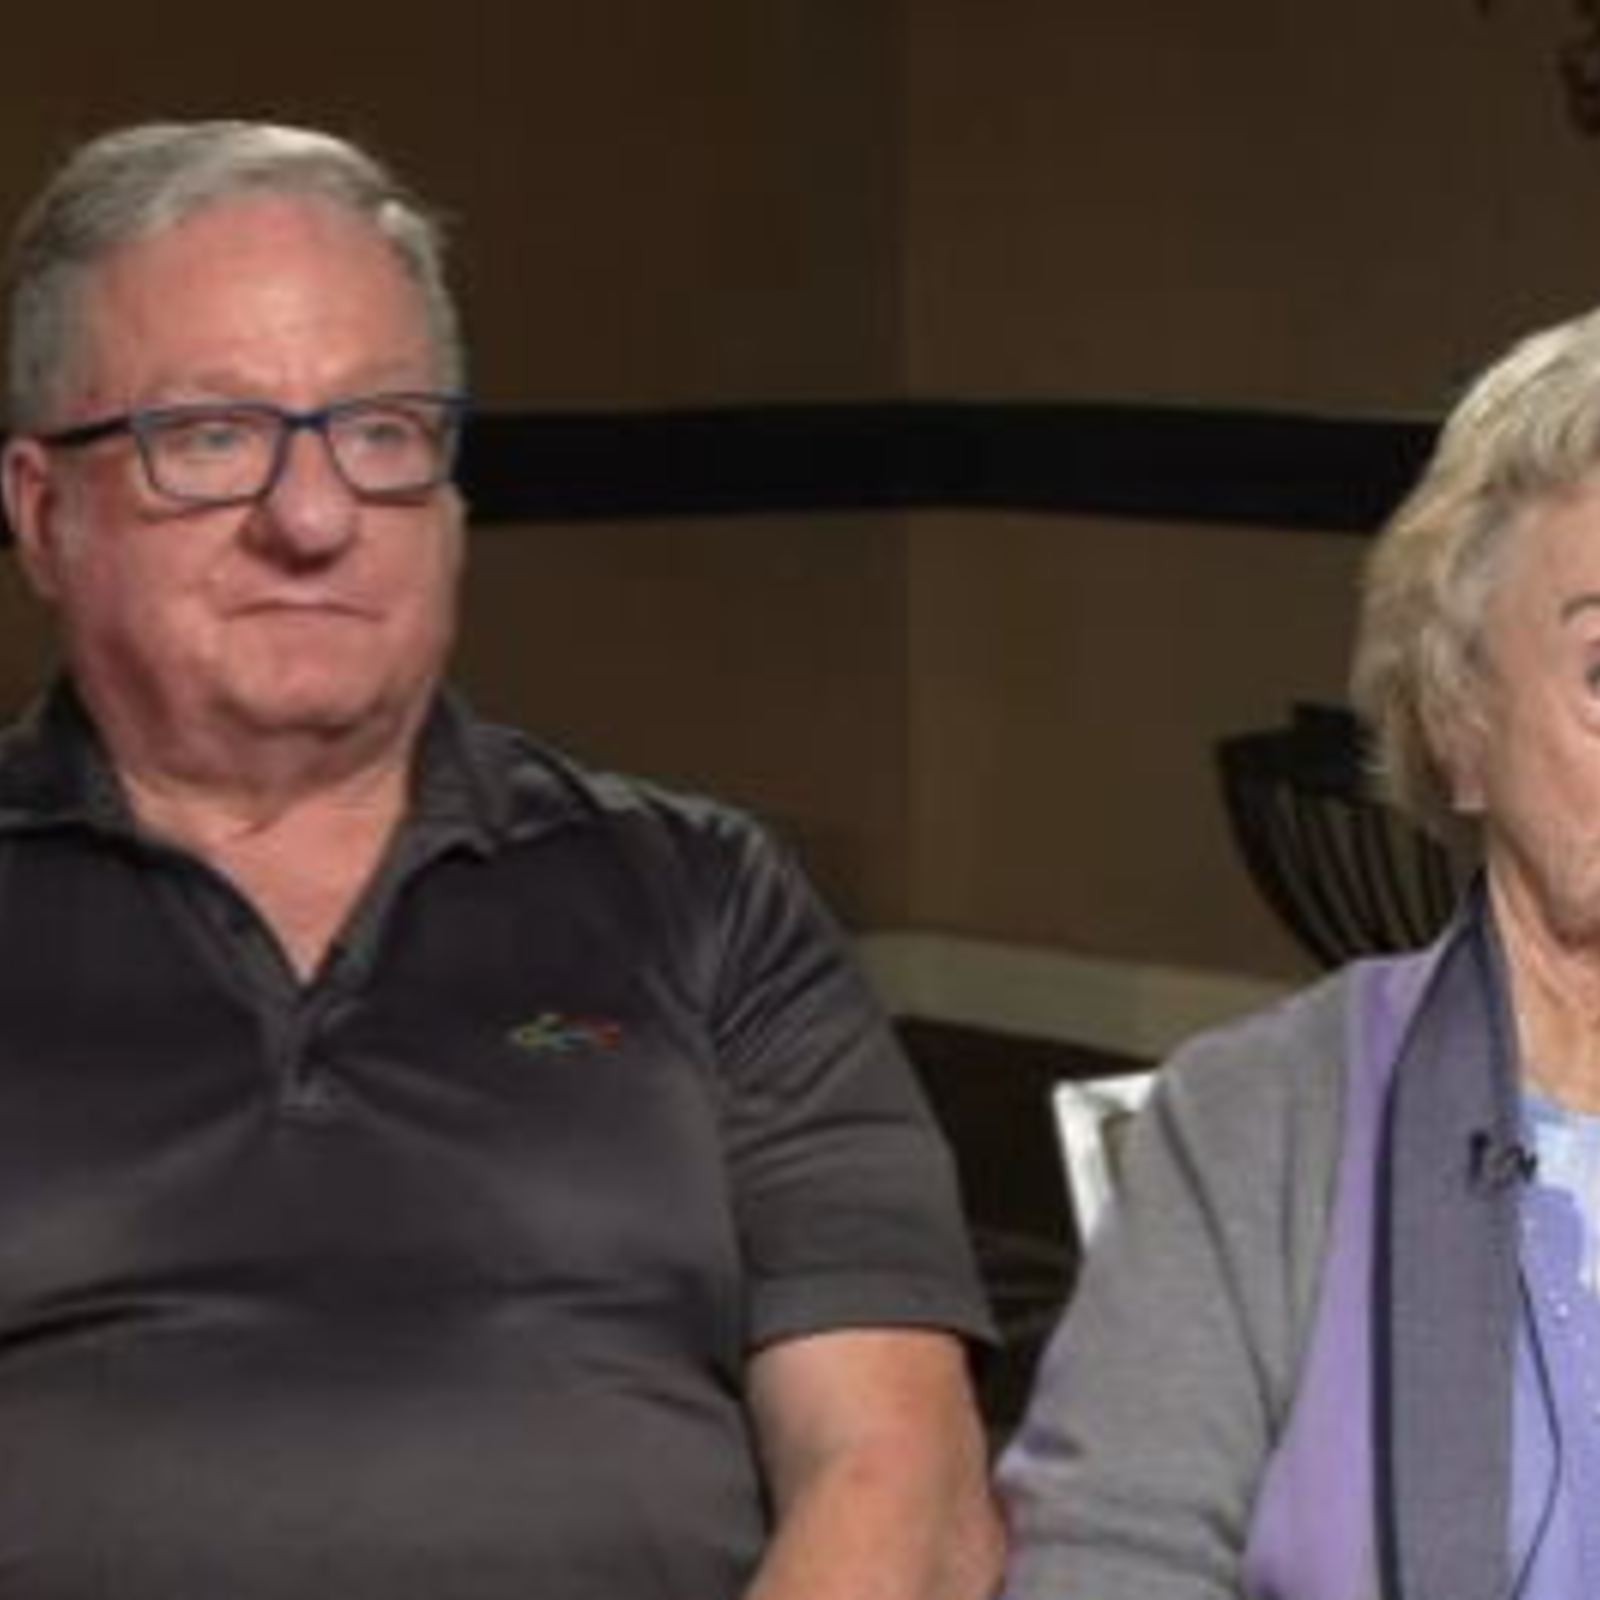 family of boeing whistleblower john barnett speaks out following his death